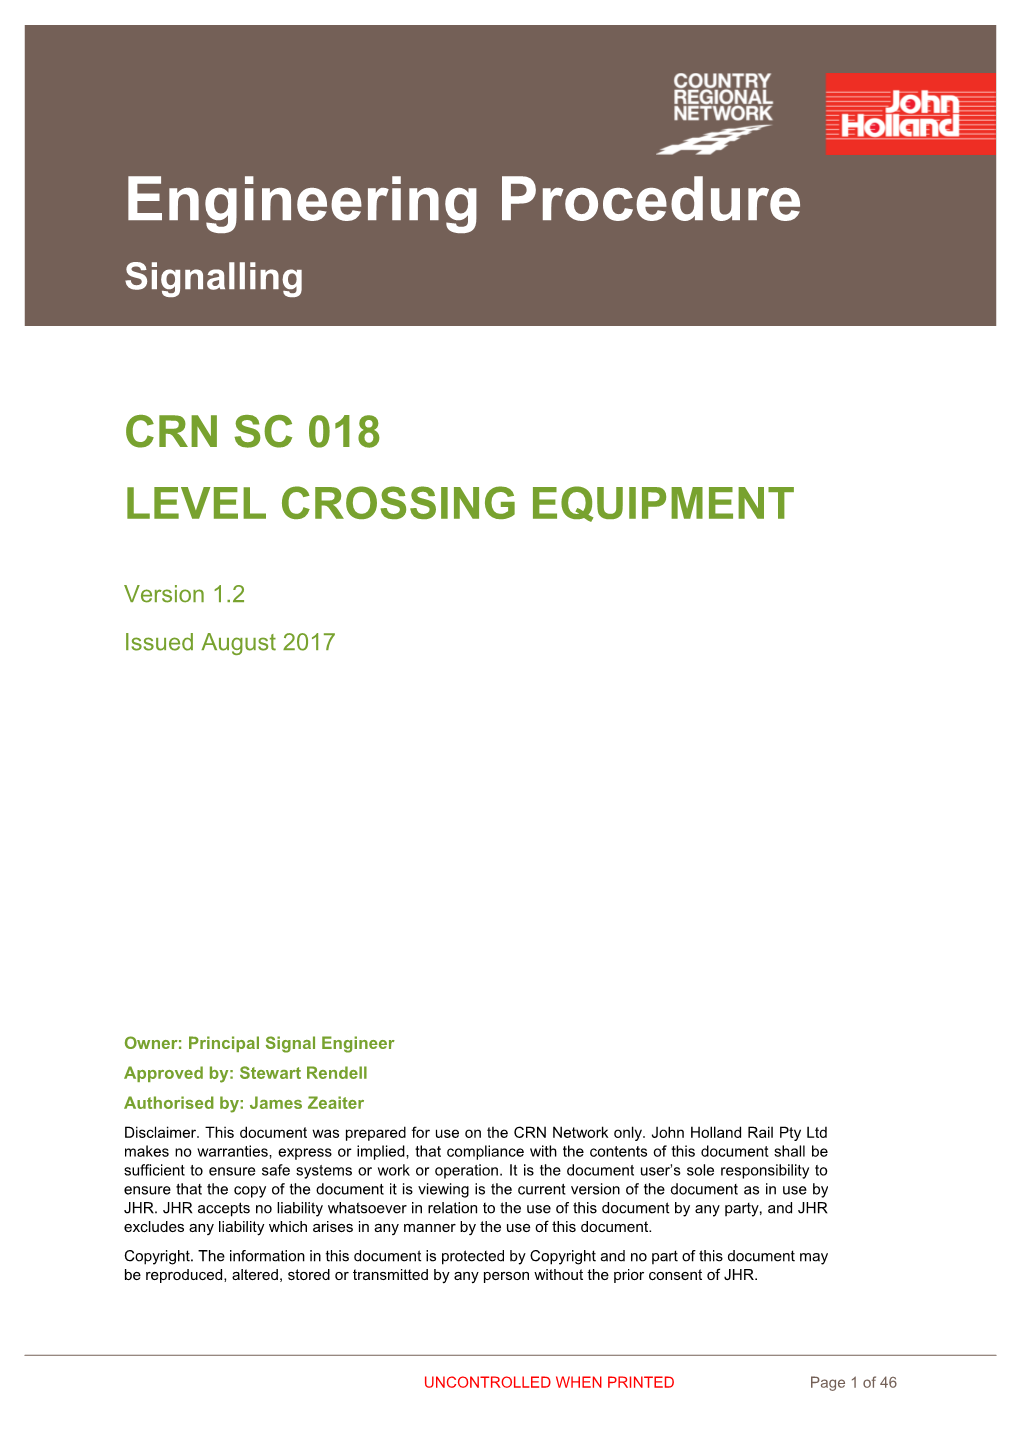 Engineering Procedure Signalling CRN SC 018 LEVEL CROSSING